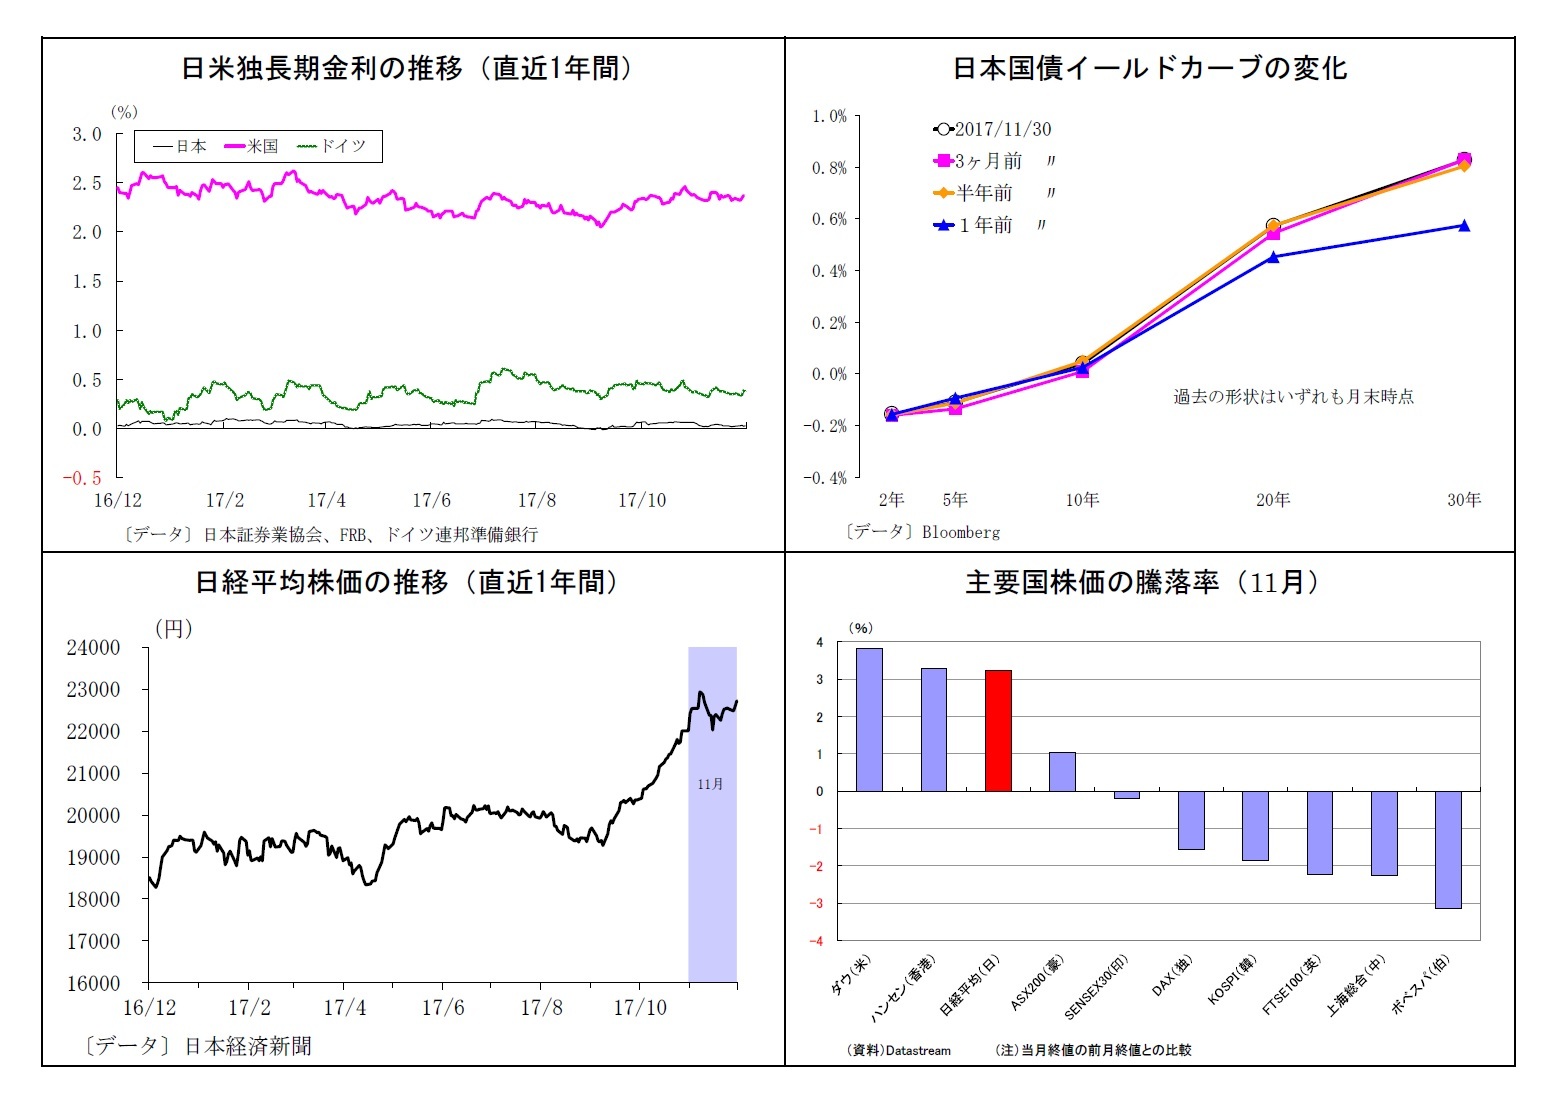 日米独長期金利の推移（直近1年間）/日本国債イールドカーブの変化/日経平均株価の推移（直近1年間）/主要国株価の騰落率（11月）